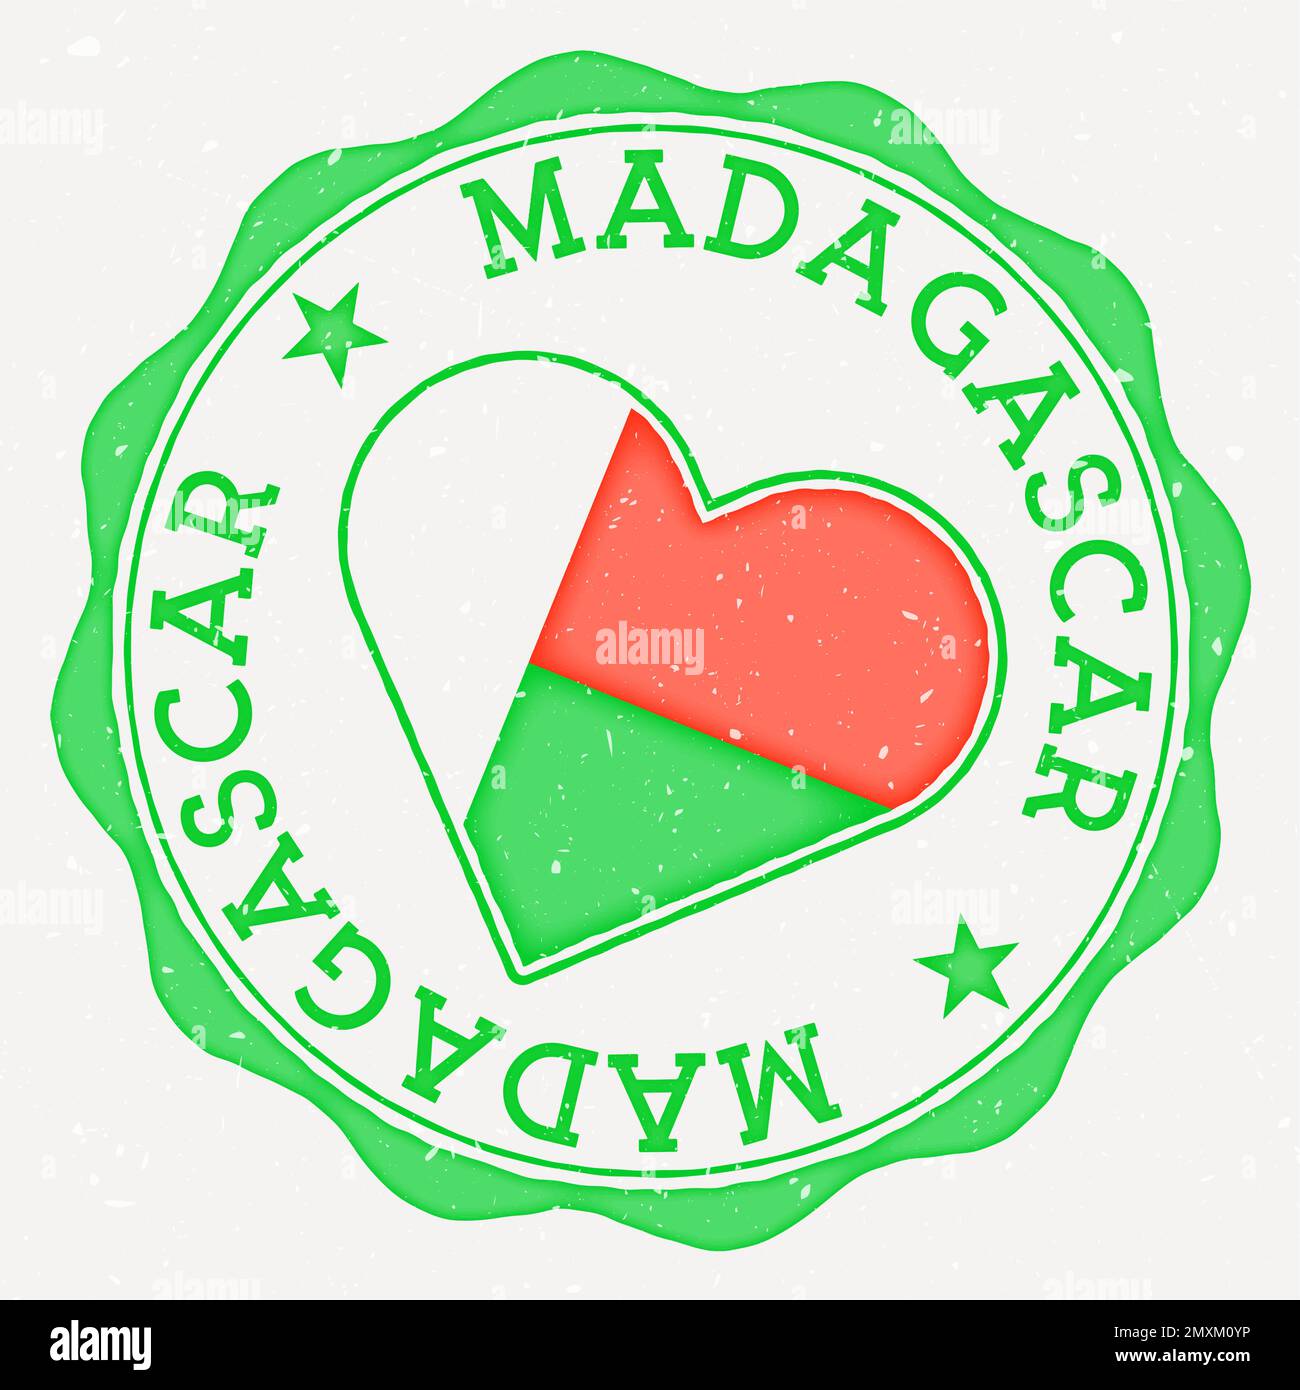 Madagascar heart flag logo. Country name text around Madagascar flag in a shape of heart. Radiant vector illustration. Stock Vector